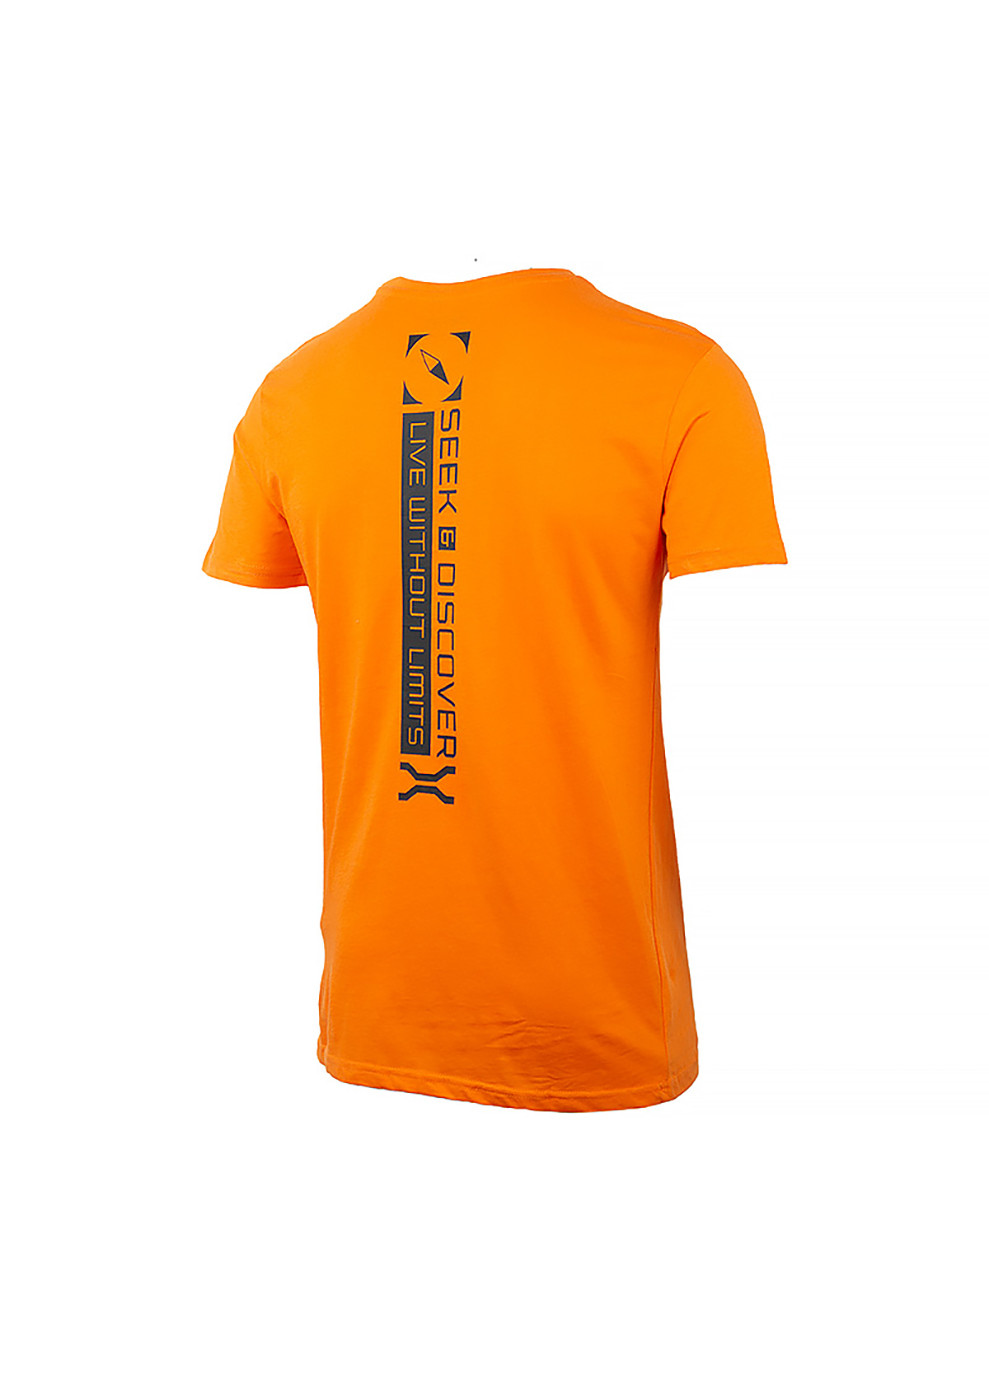 Оранжевая мужская футболка t-shirt seek&discovery back vertical print jx22a оранжевый s (o102628-o288 s) Jeep